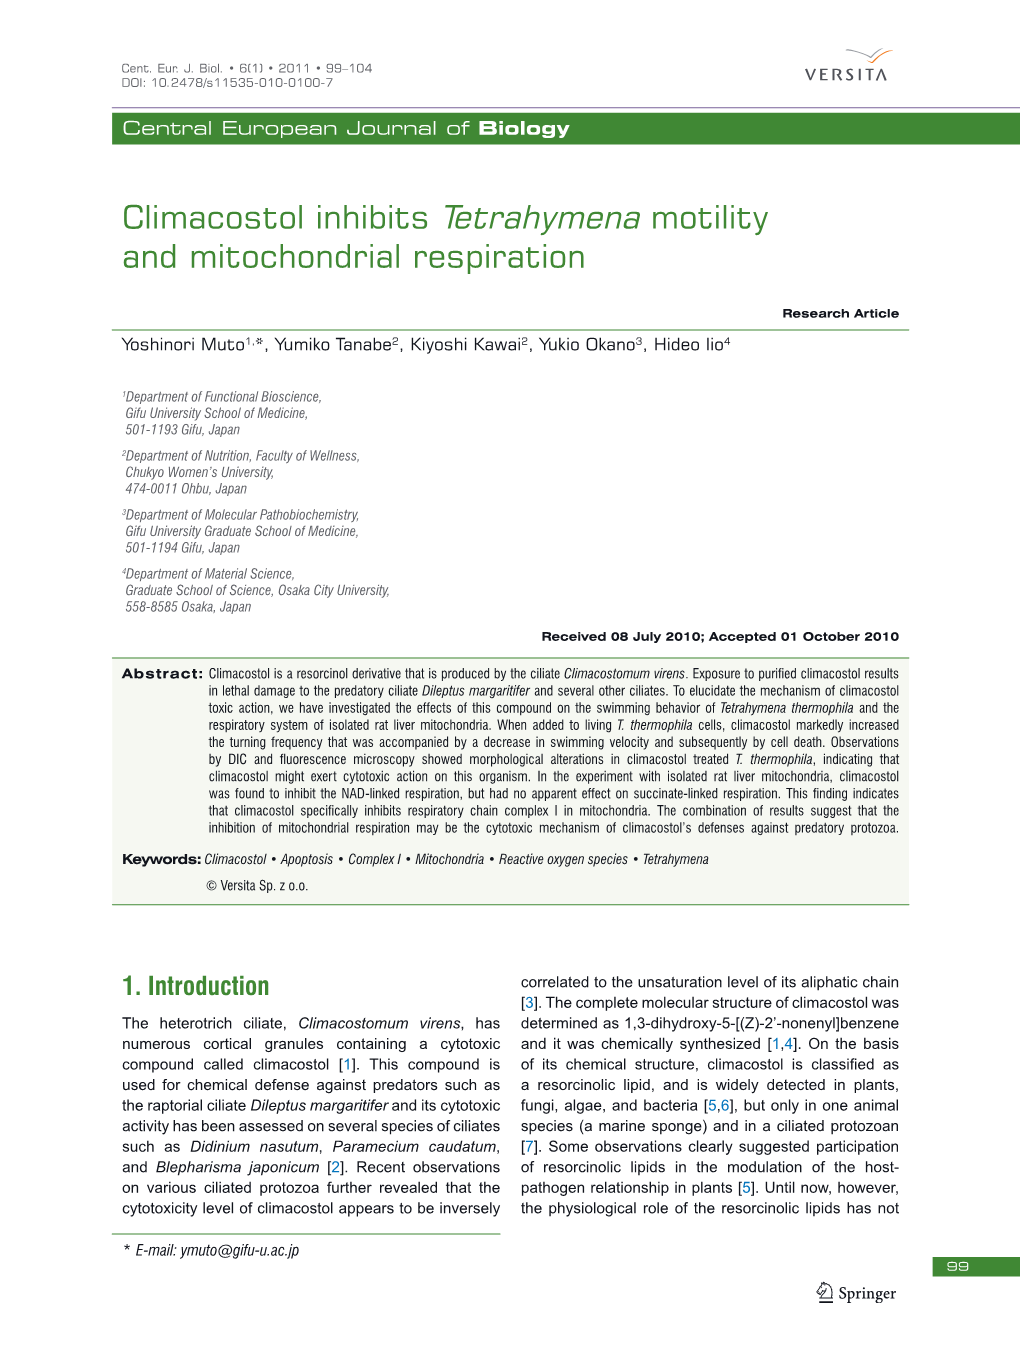 Climacostol Inhibits Tetrahymena Motility and Mitochondrial Respiration